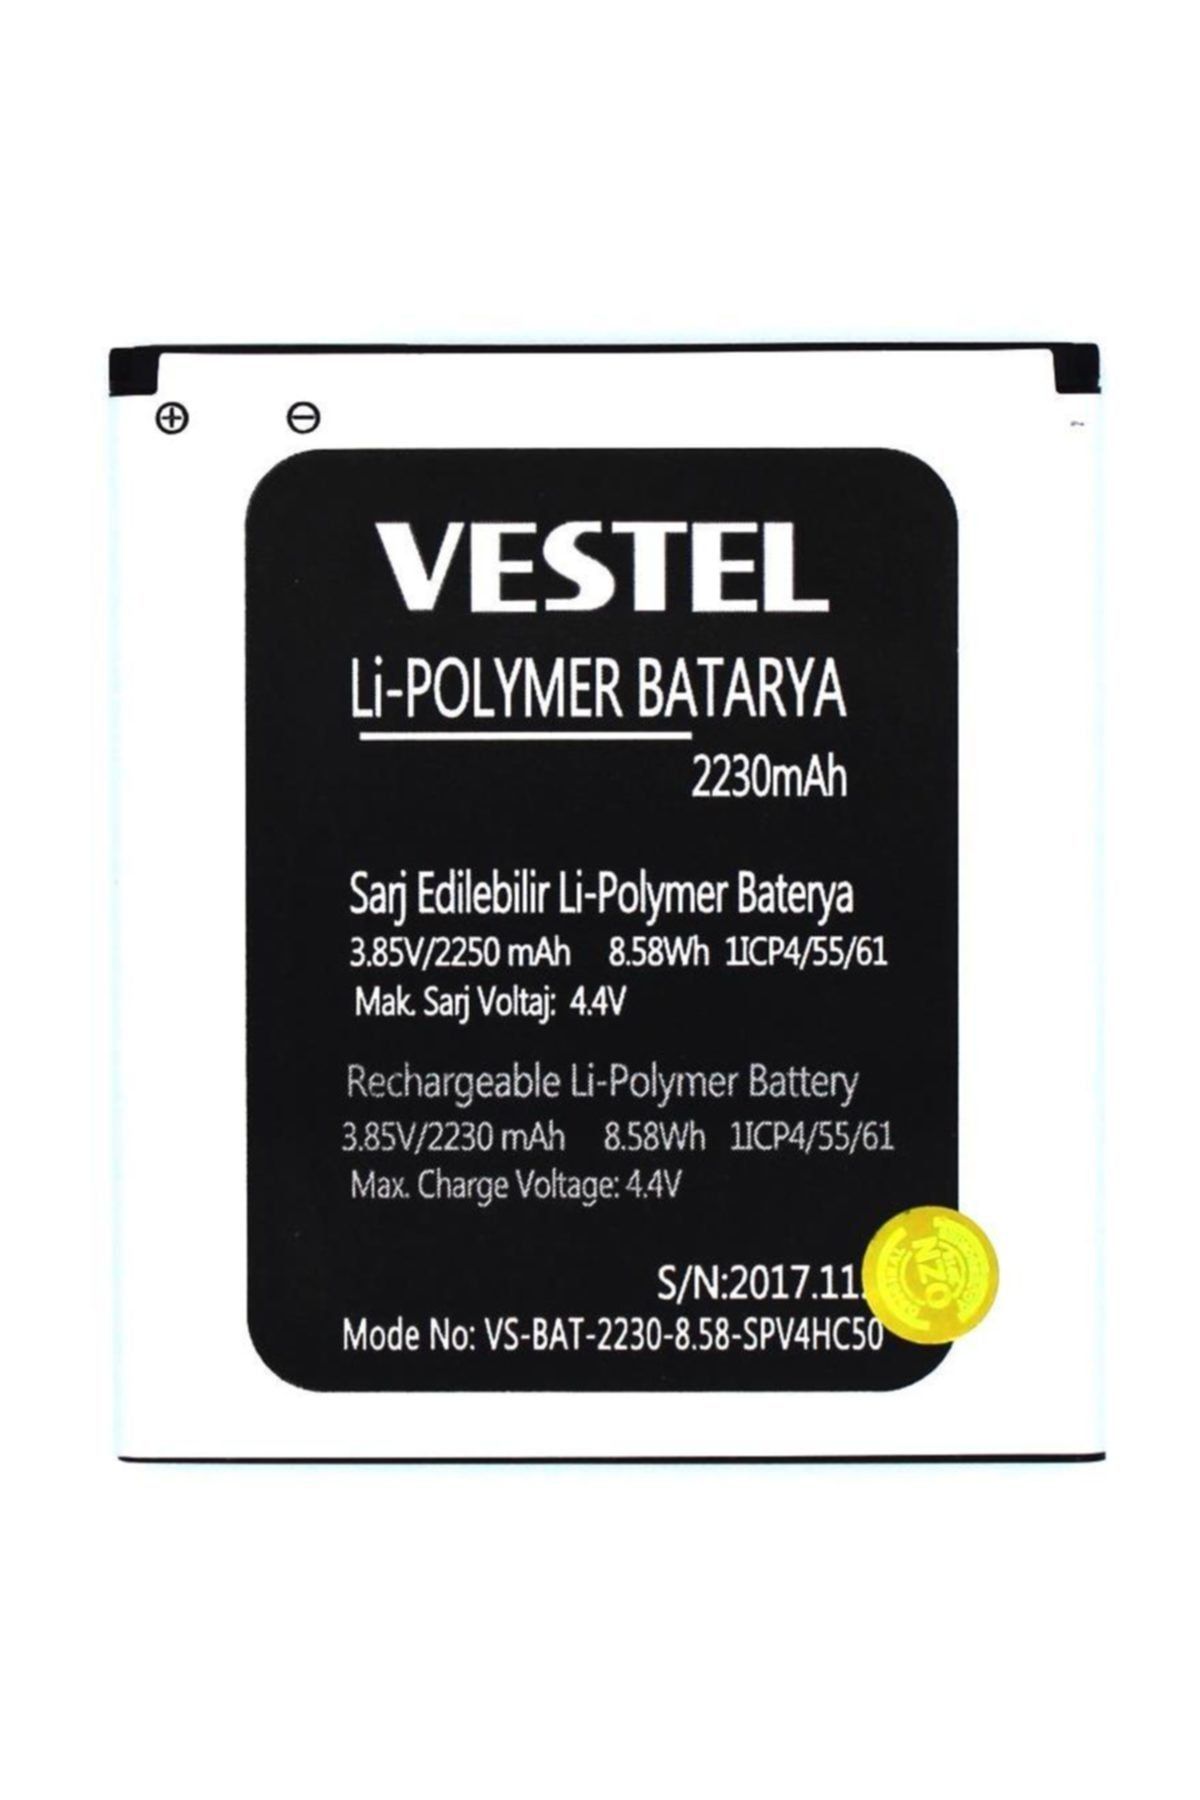 VESTEL V3 5000 Batarya Pil A++ Lityum Polimer  Pil